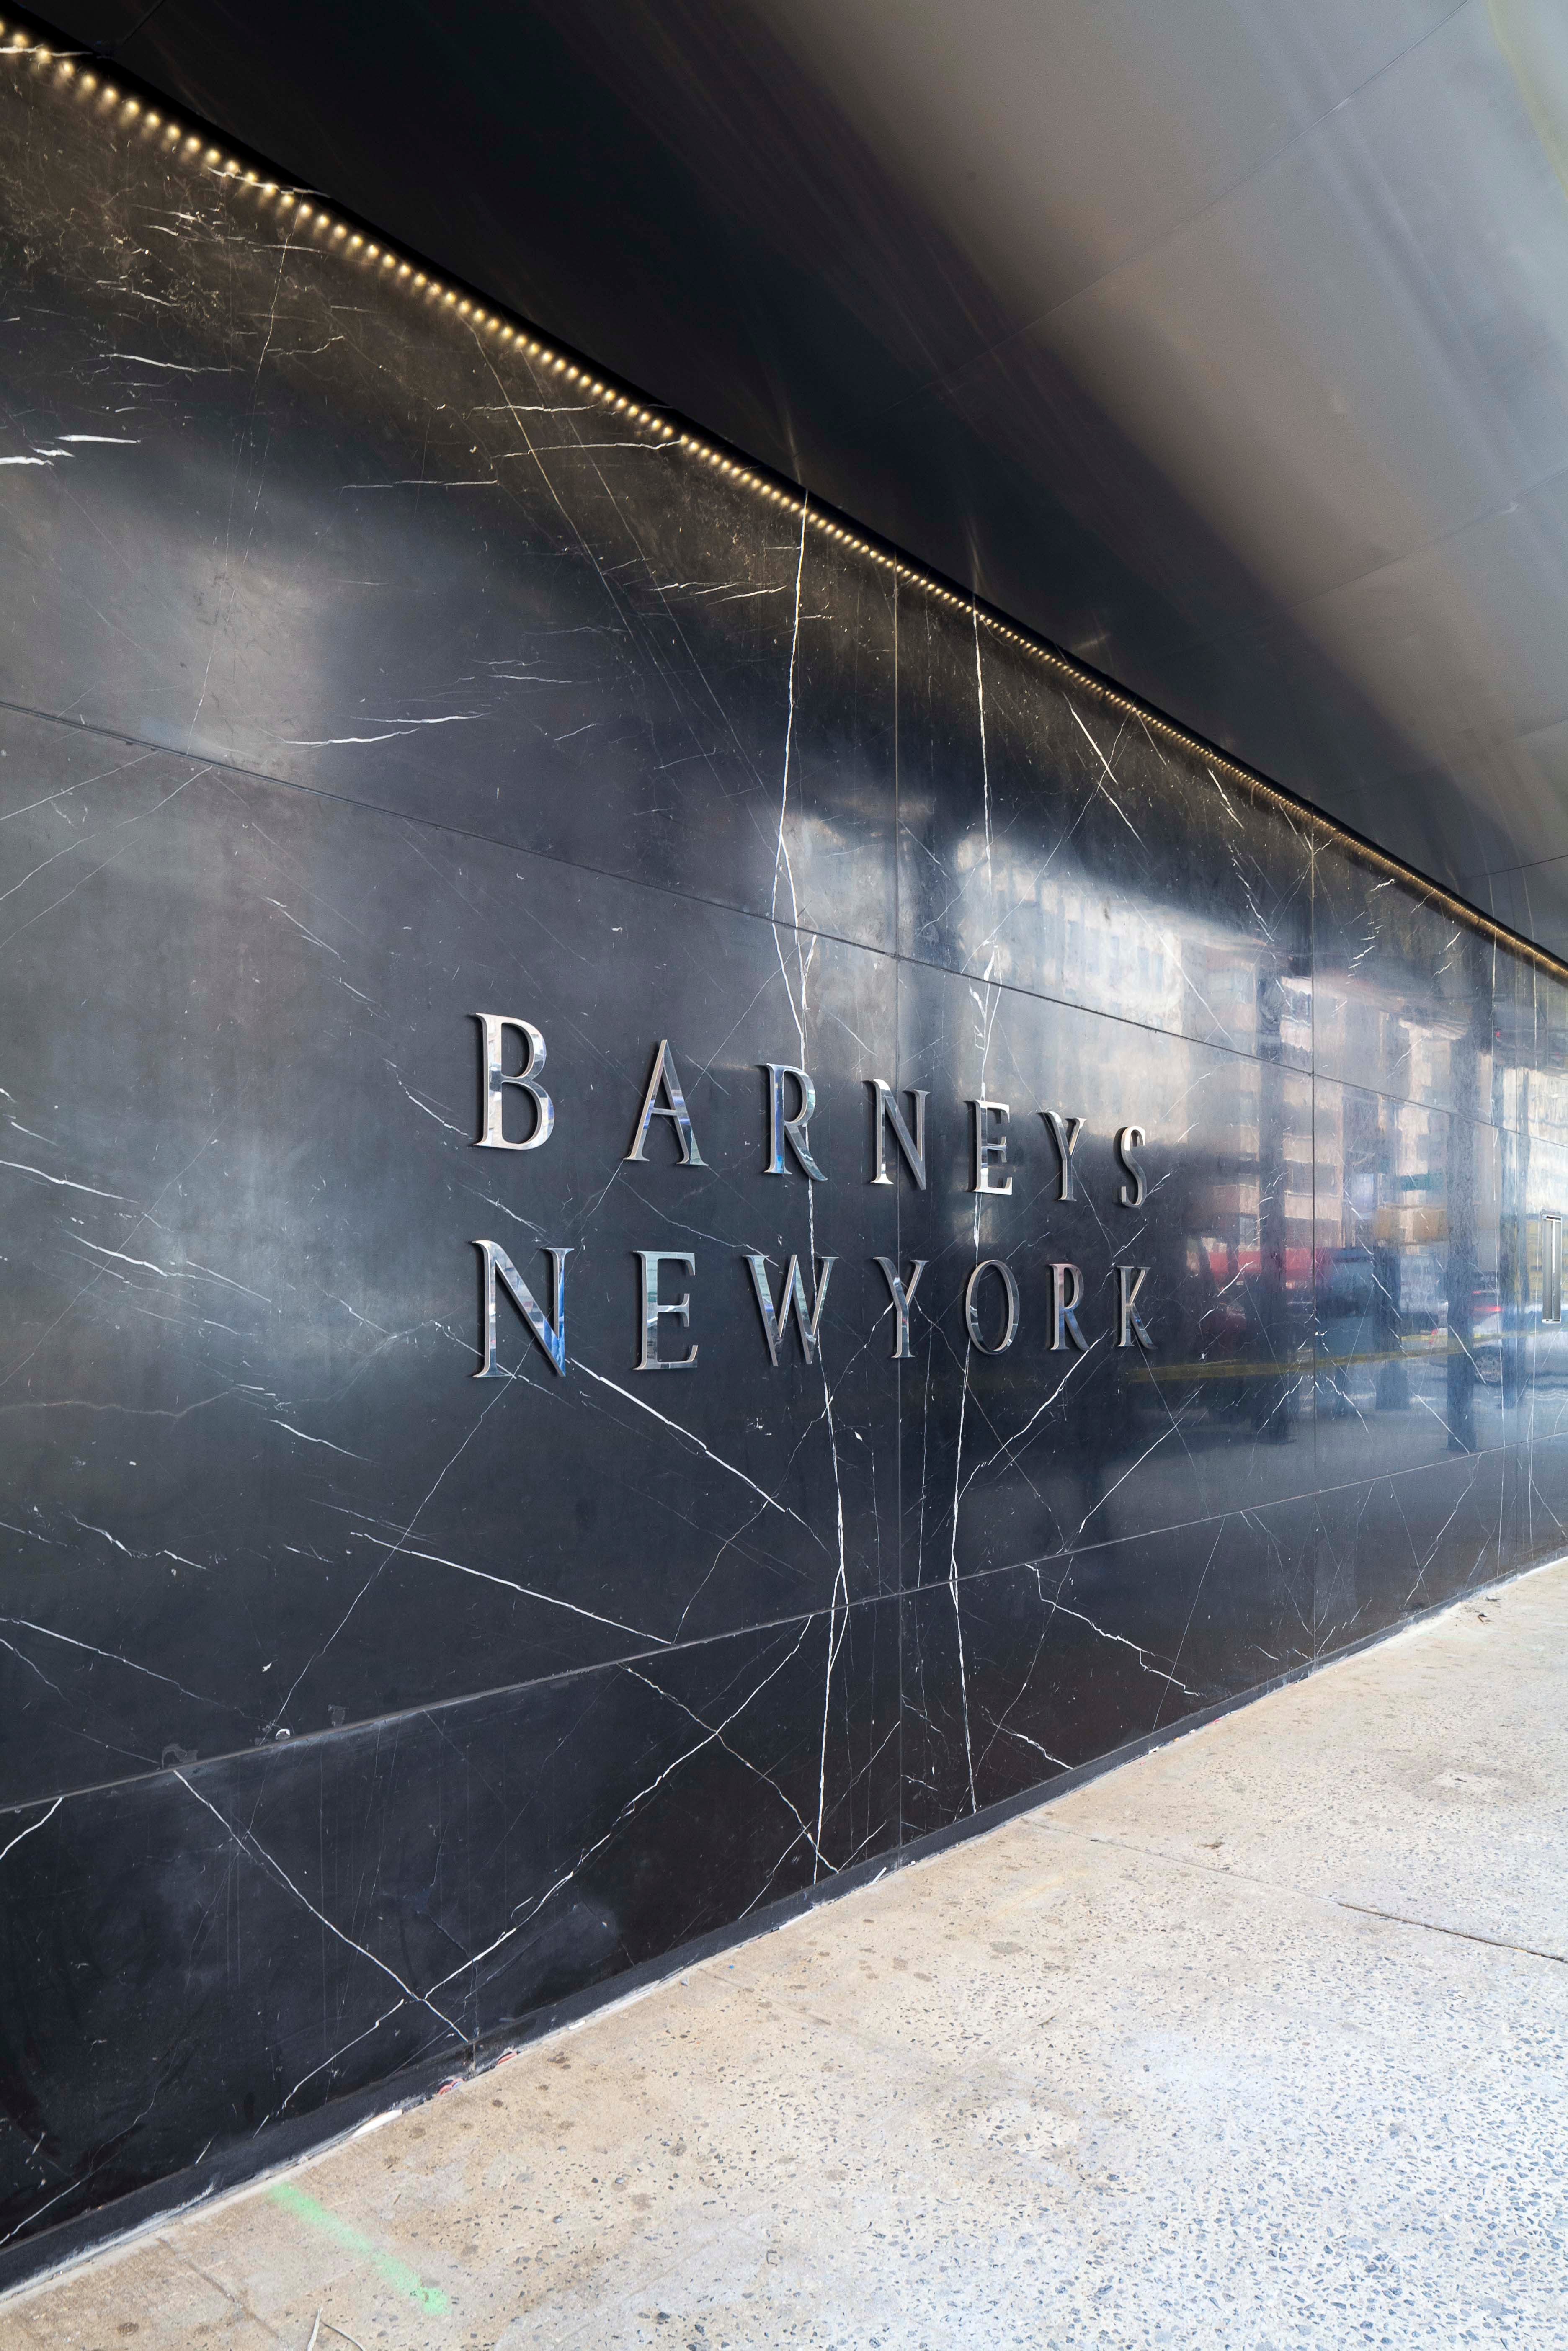 Barneys New York marble exterior.